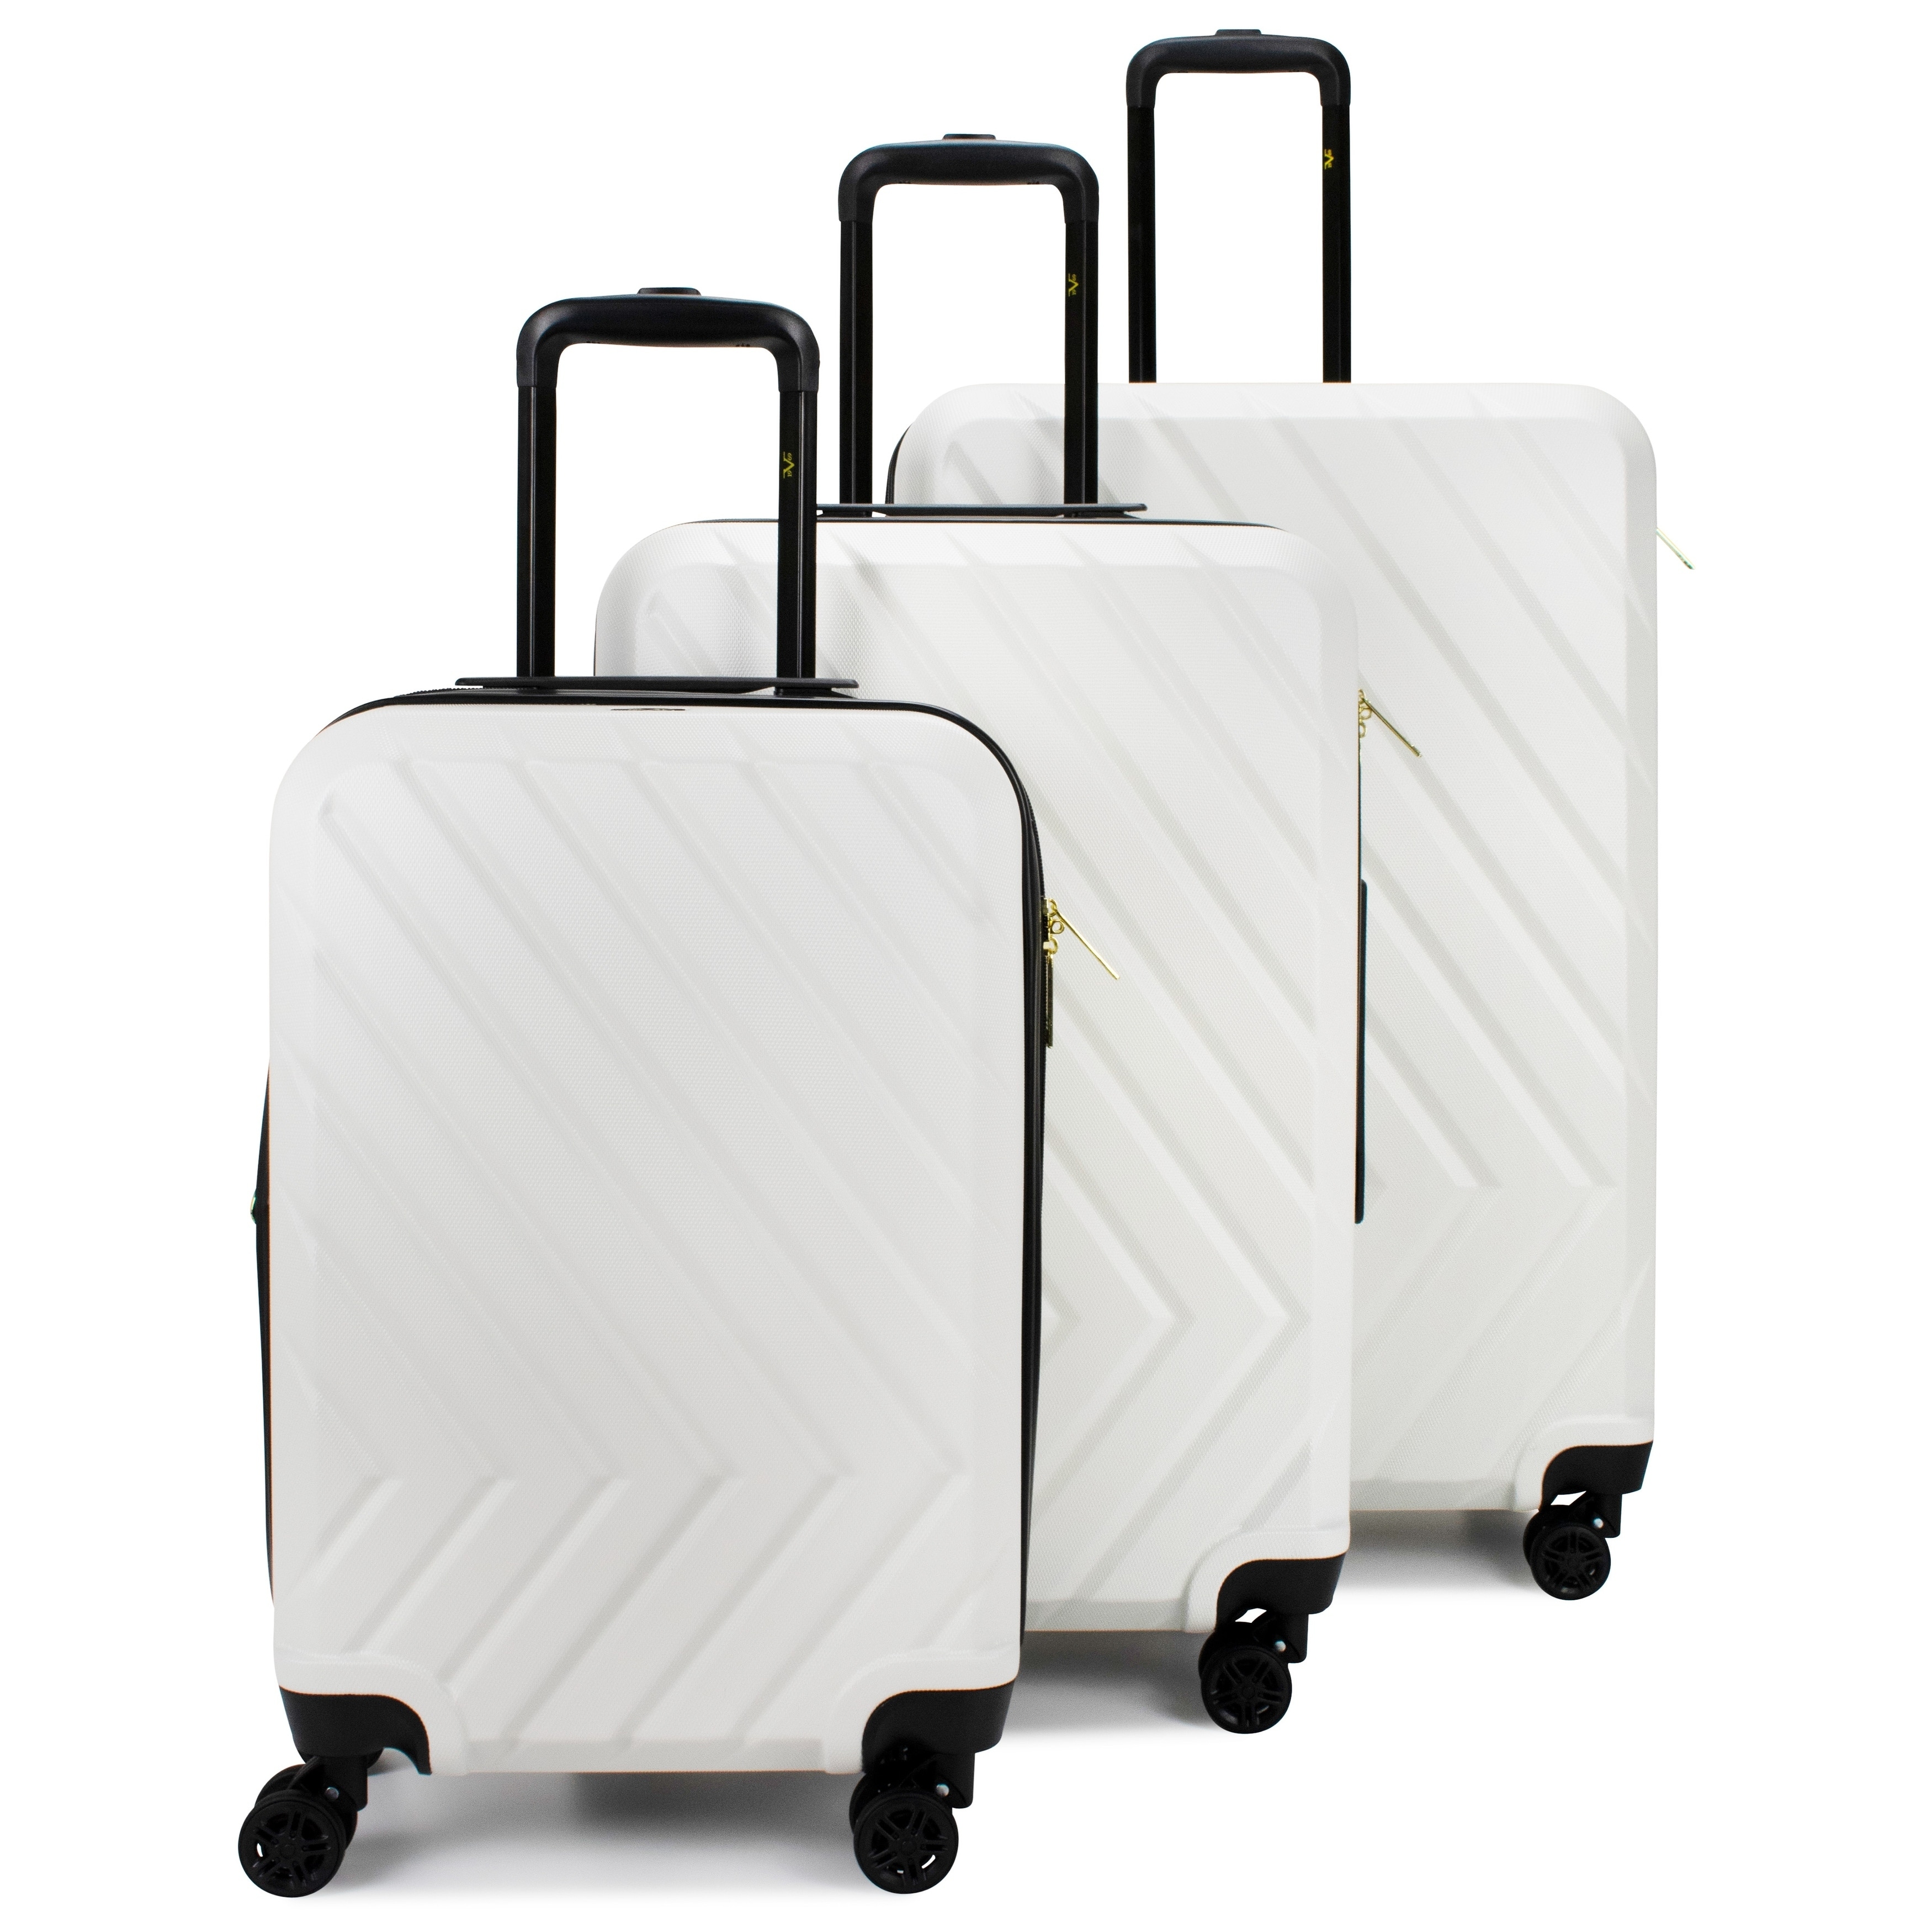 19V69 Italia Arrow Expandable Spinner Luggage Set (2-Piece)